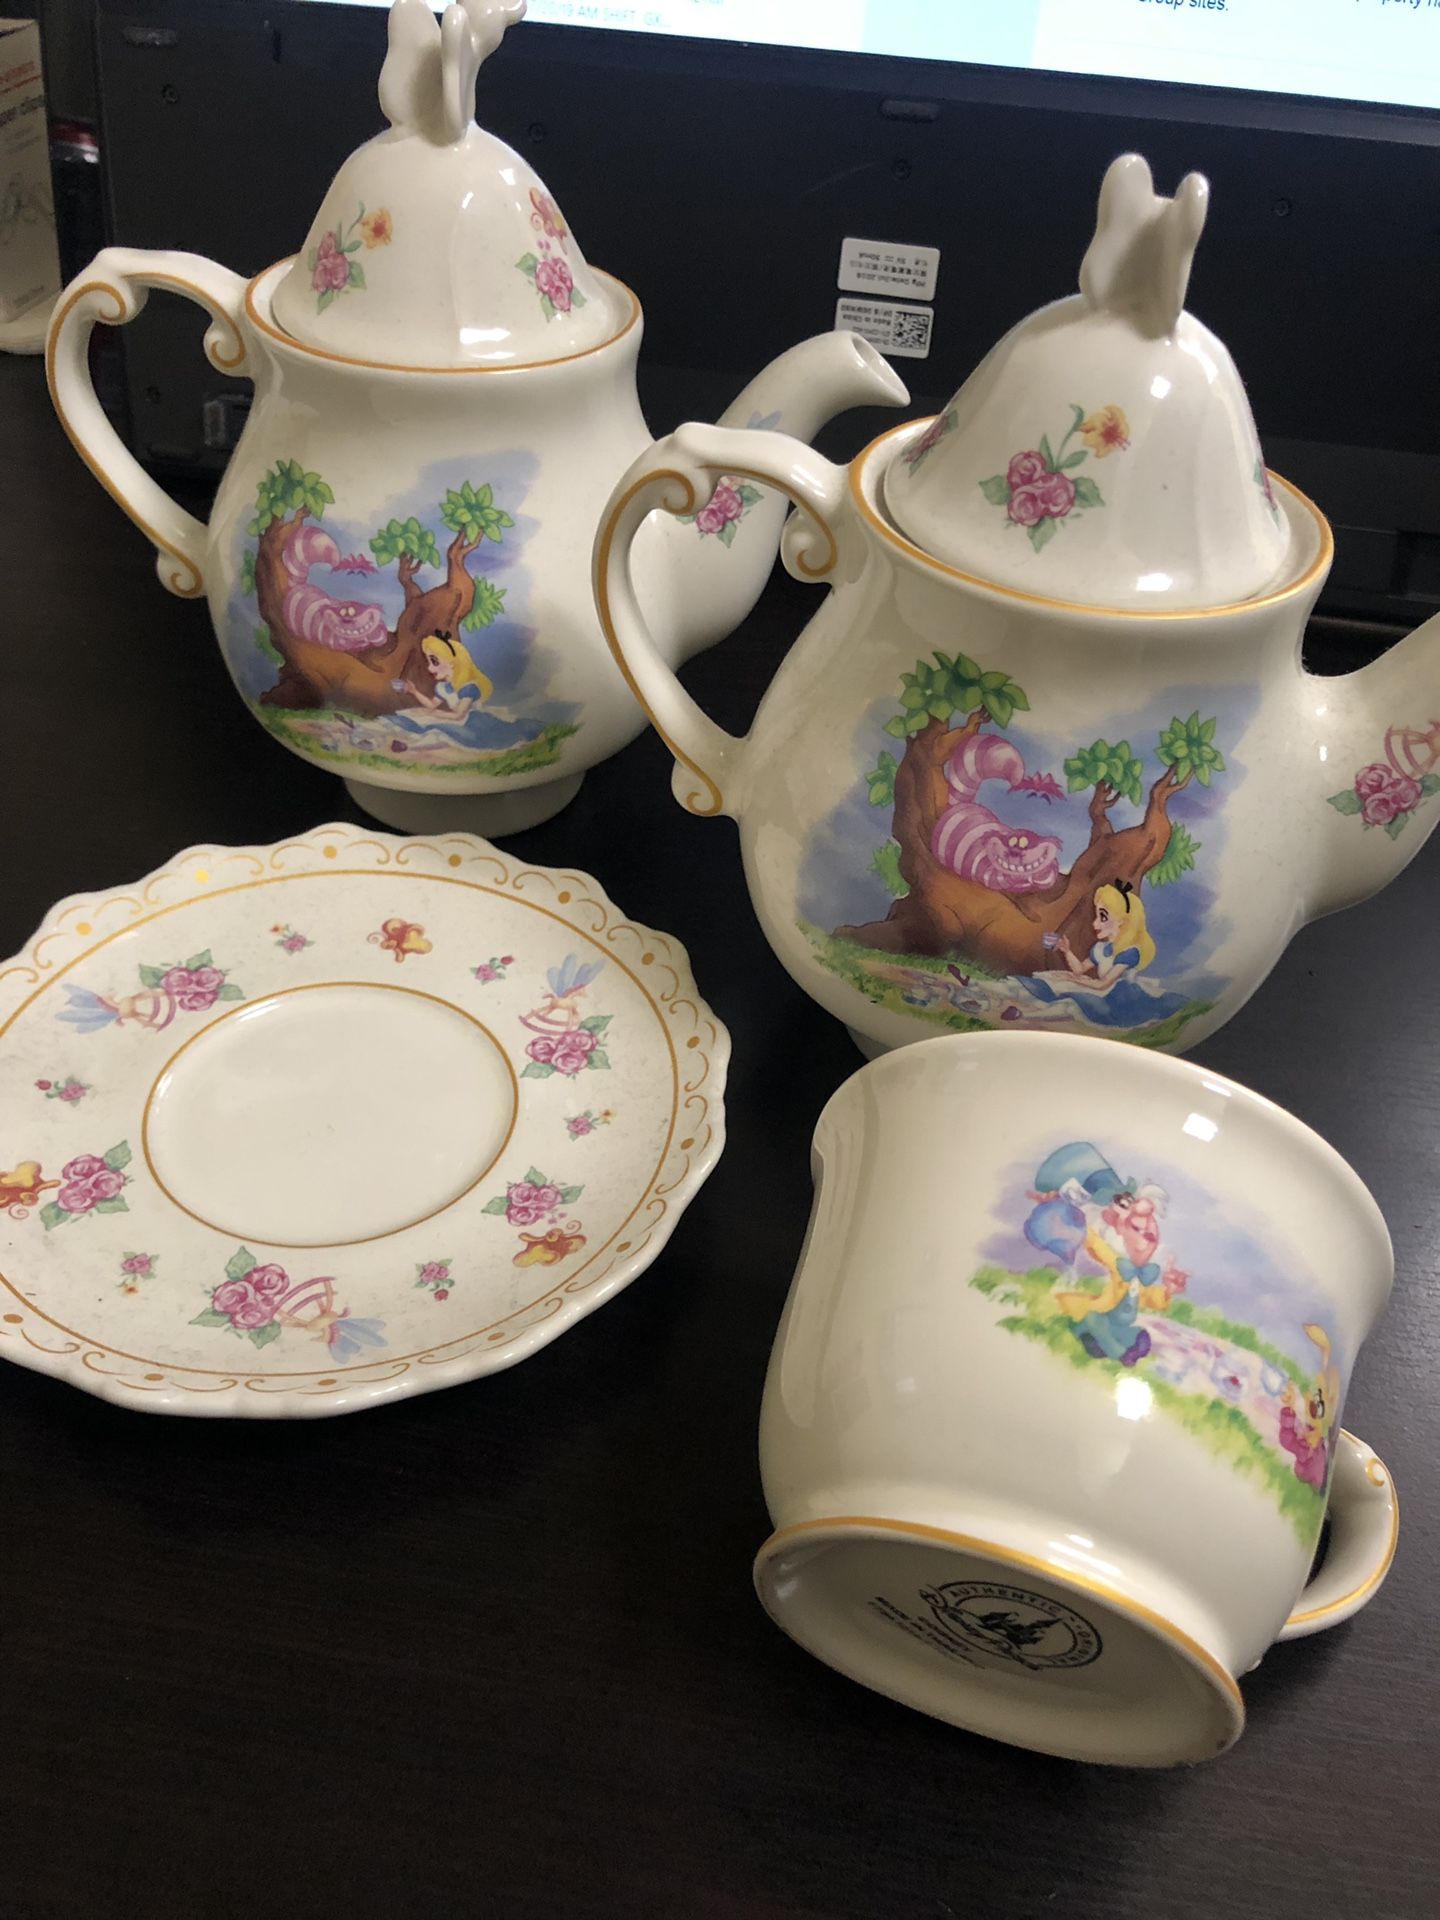 Alice in wonderland tea-set